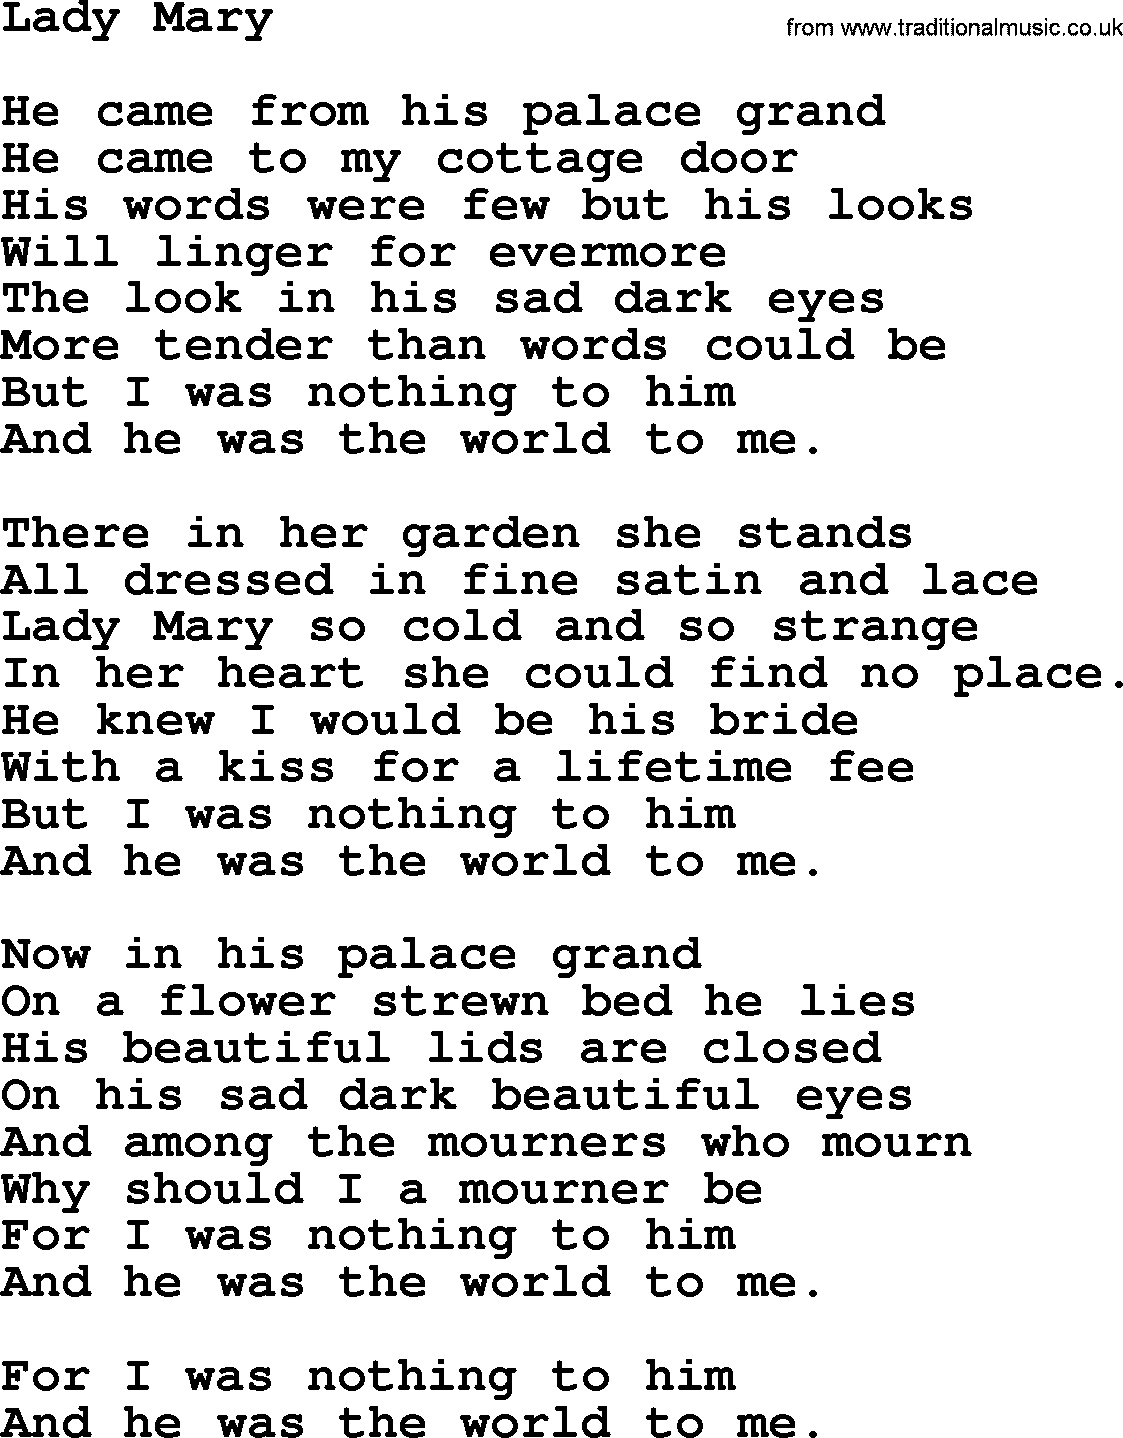 Joan Baez song Lady Mary, lyrics